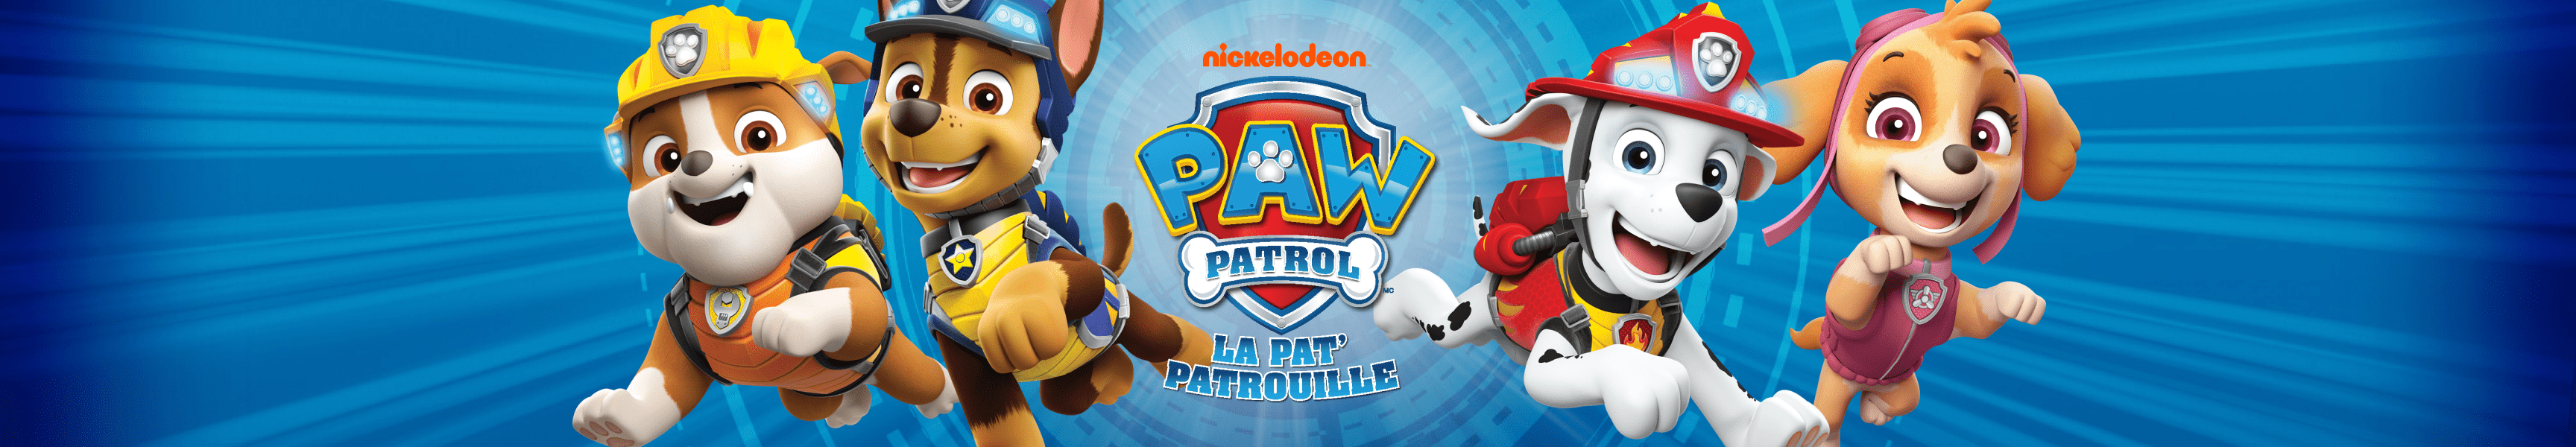 PAW Patrol Novedades